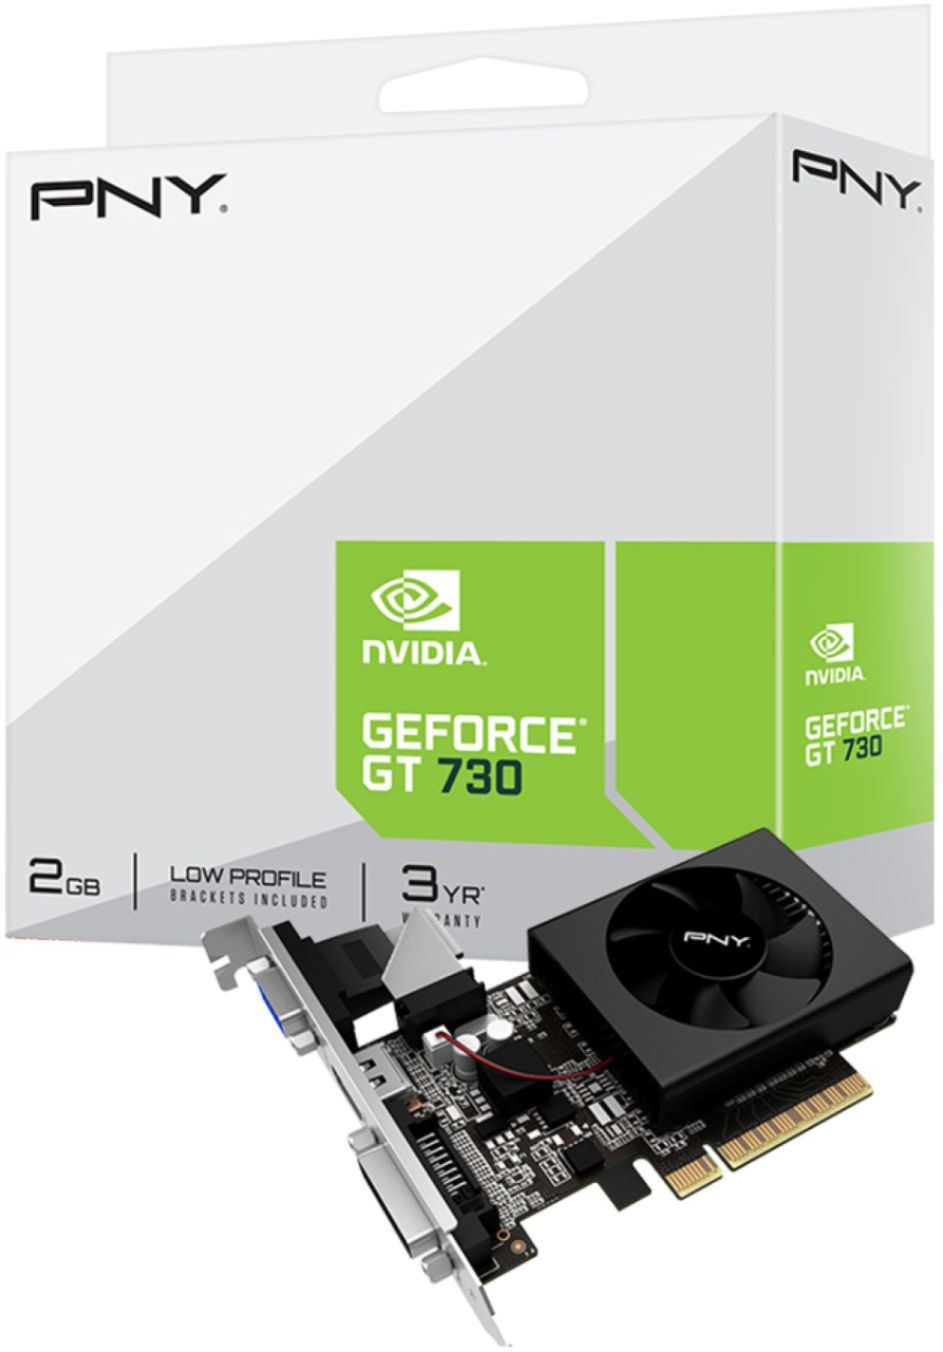 

PNY - NVIDIA GeForce GT 730 2GB DDR3 Single Fan Graphics Card